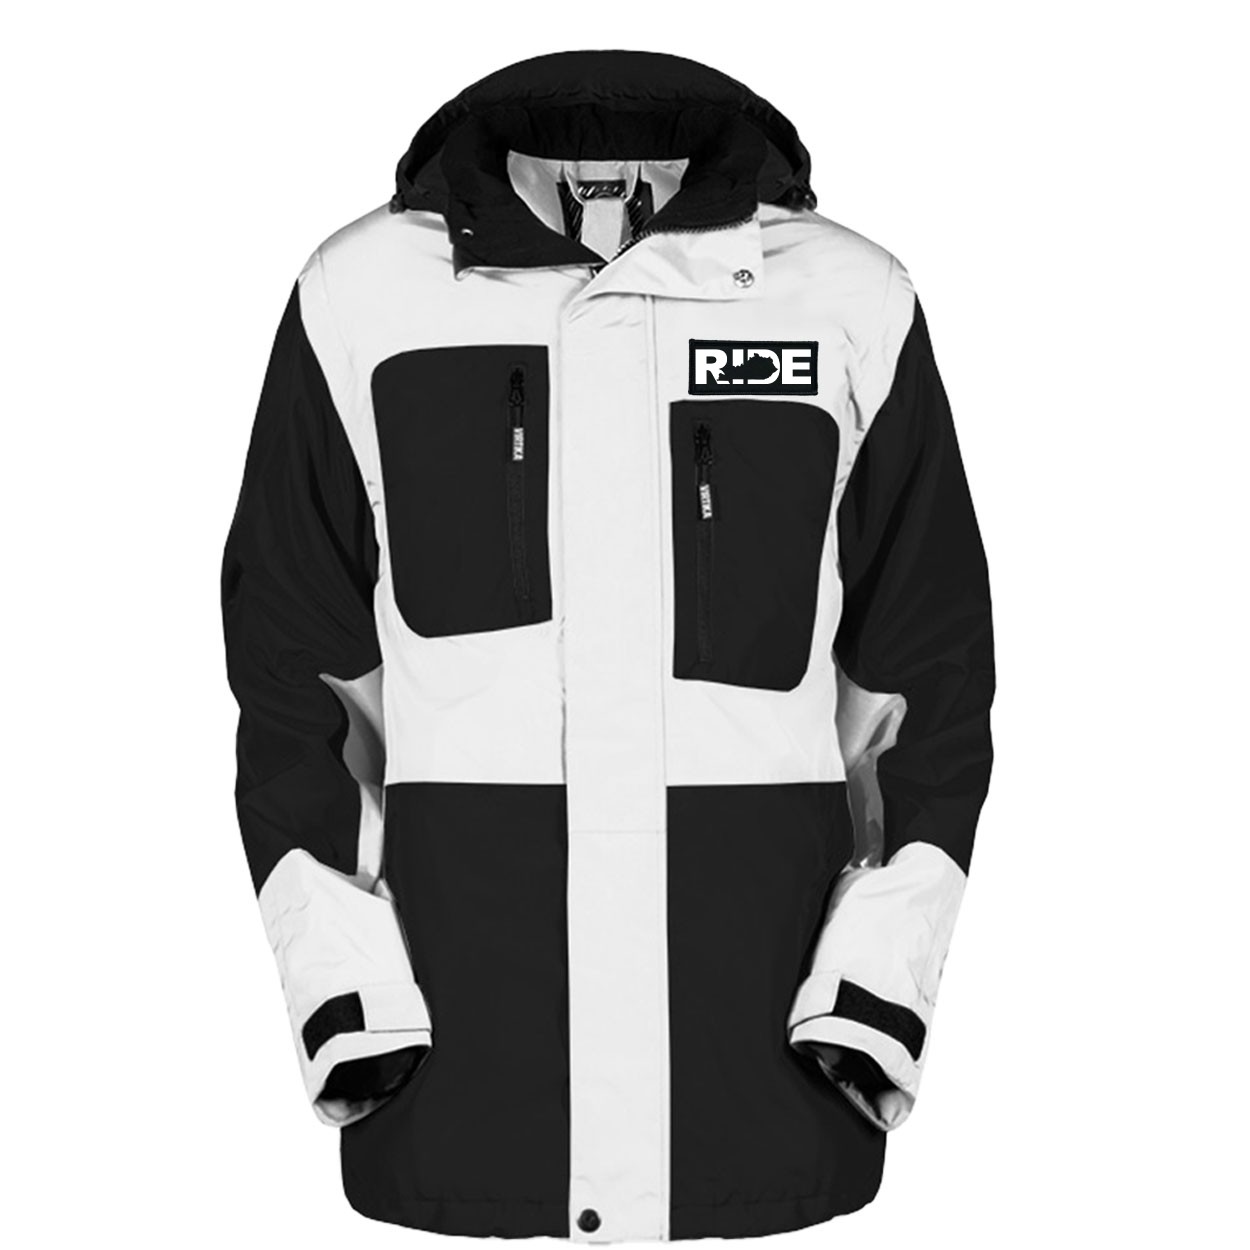 Ride Kentucky Classic Woven Patch Pro Snowboard Jacket (Black/White)